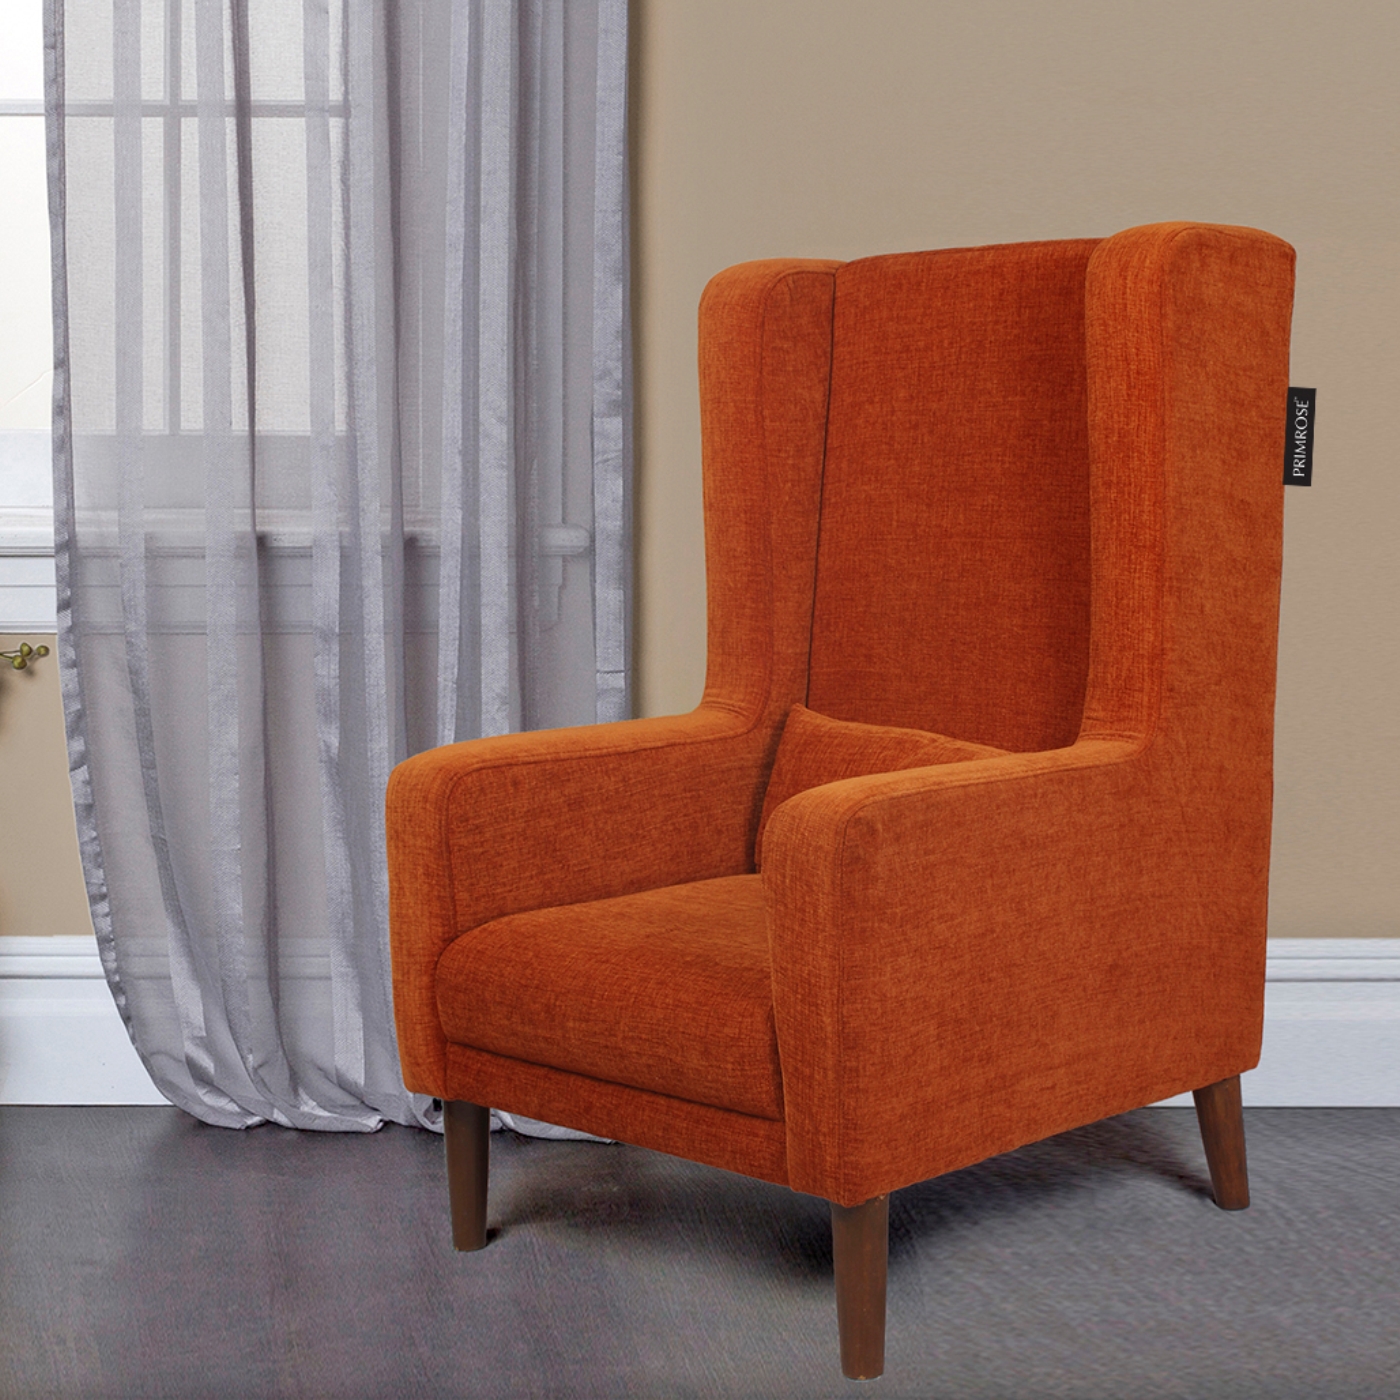 PRIMROSE Chicago High Back Molfino Fabric Chair - Orange  